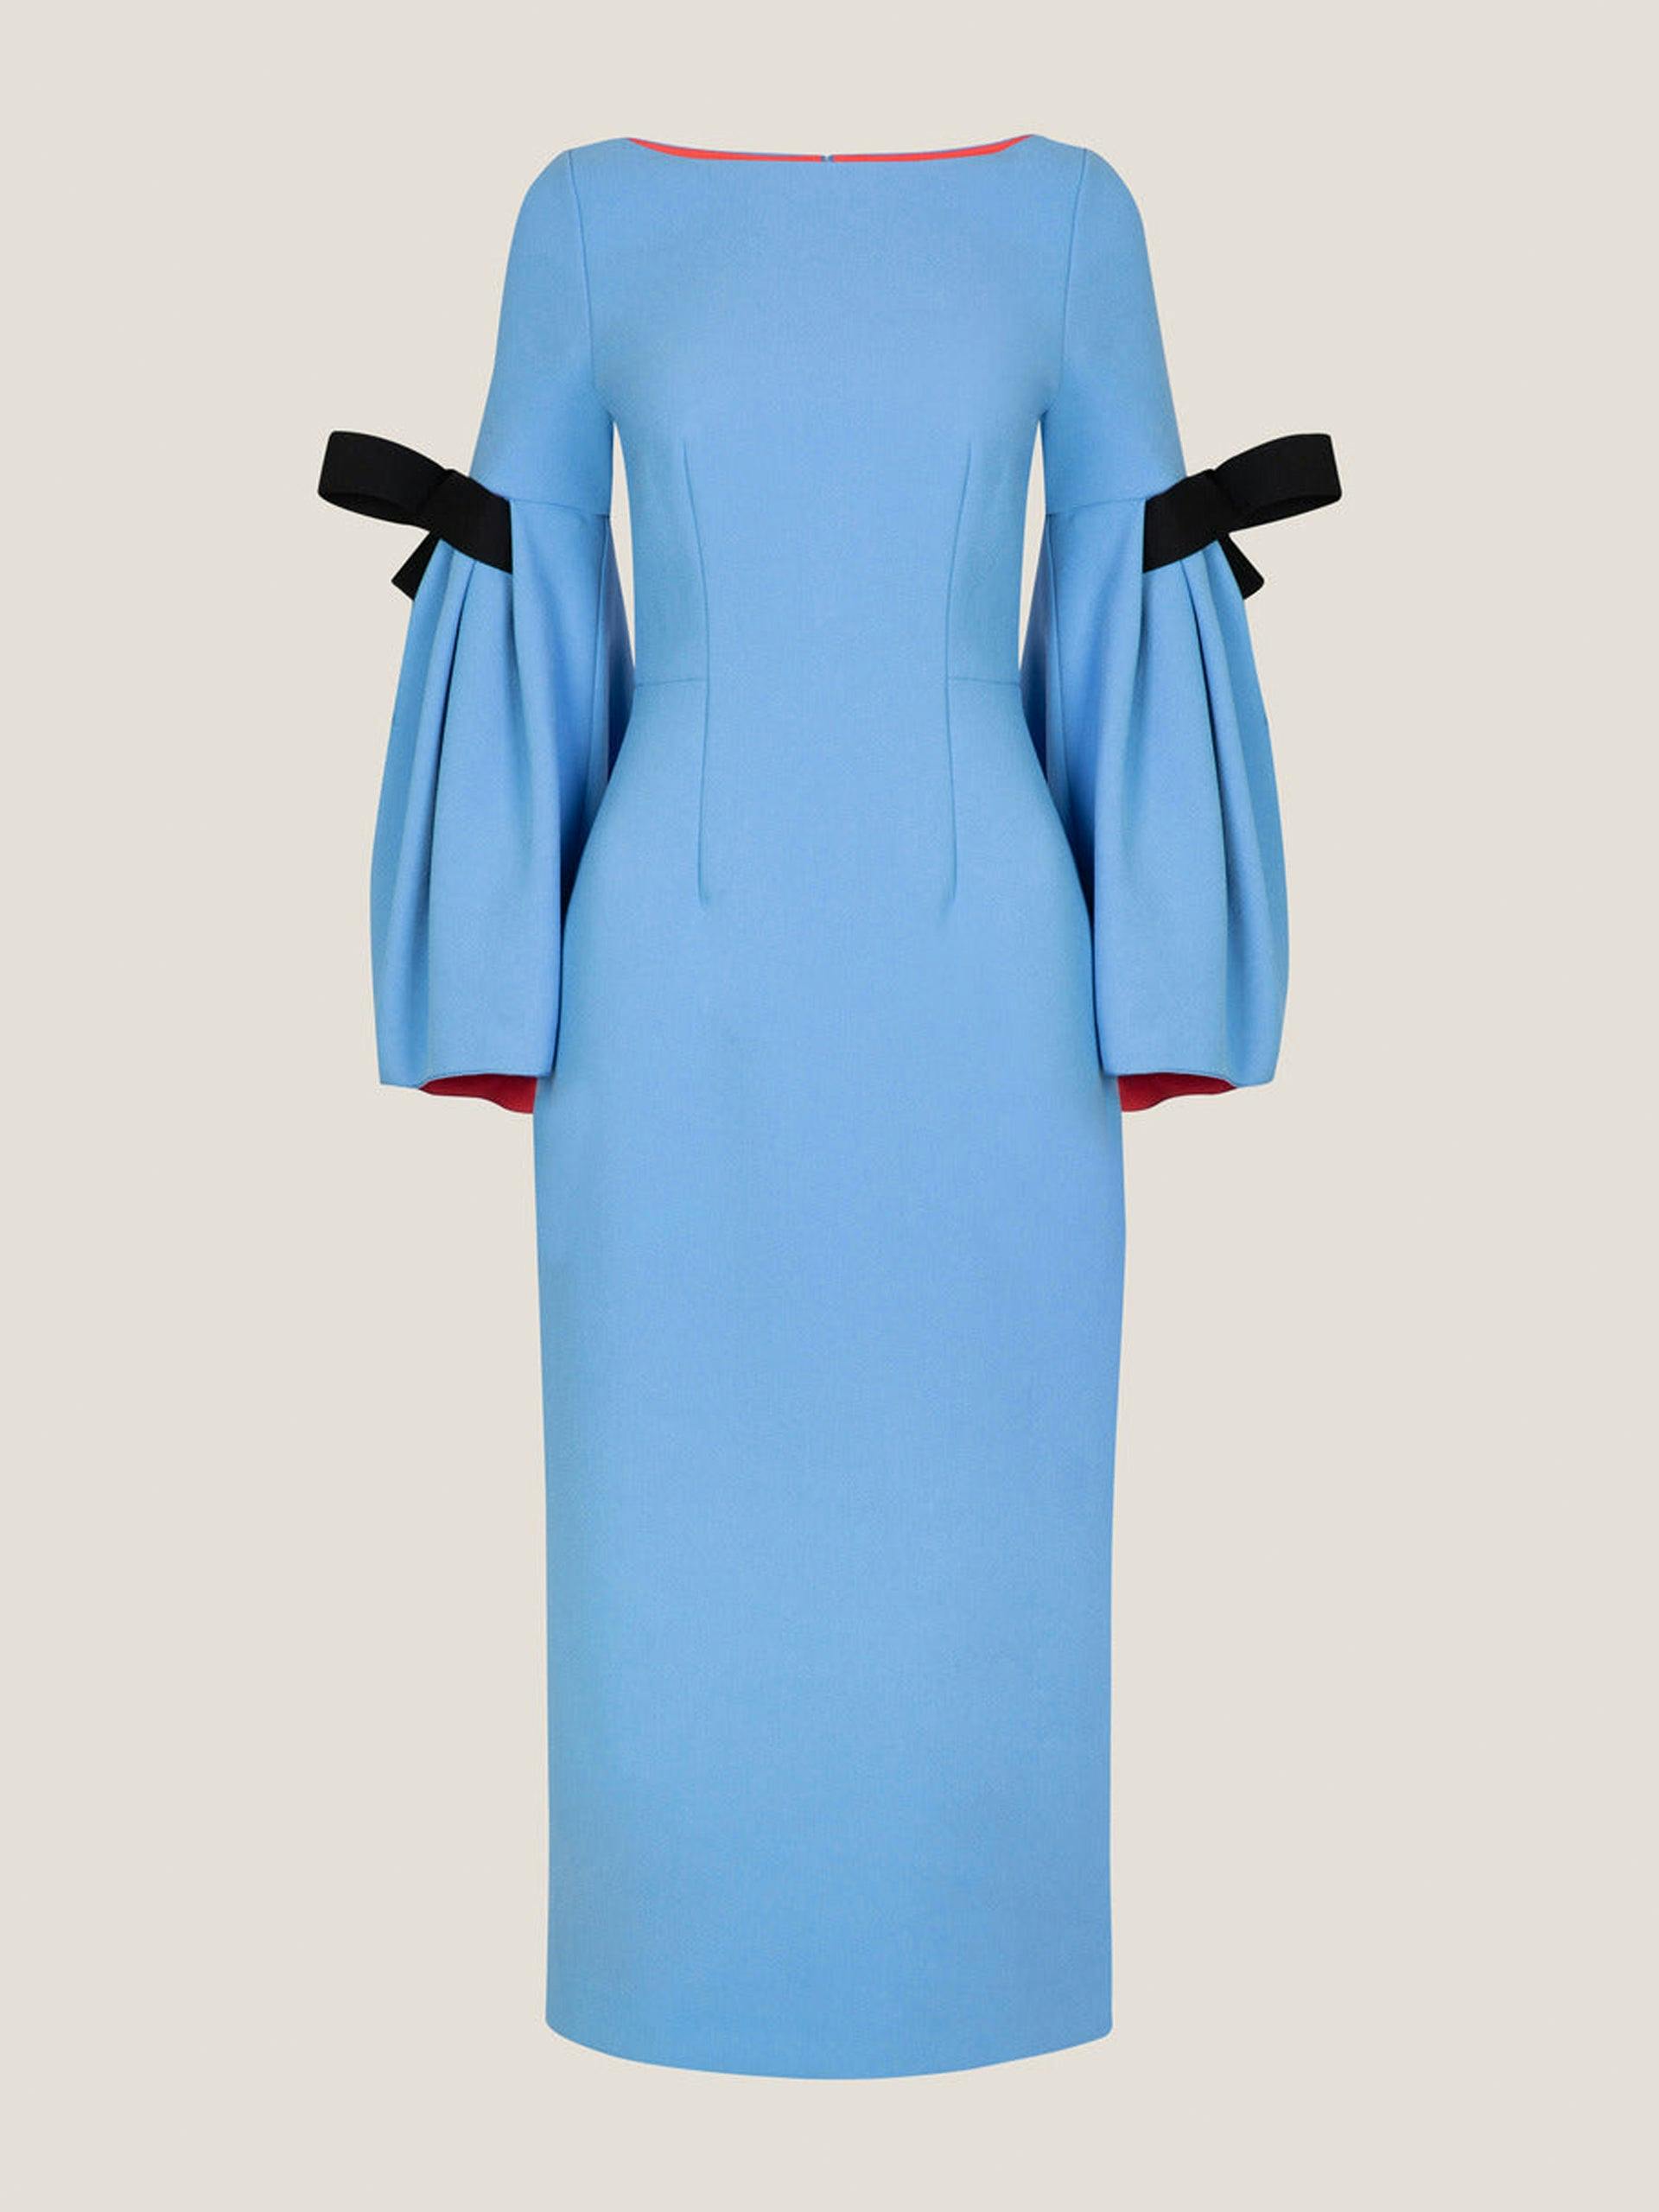 Calispi blue dress